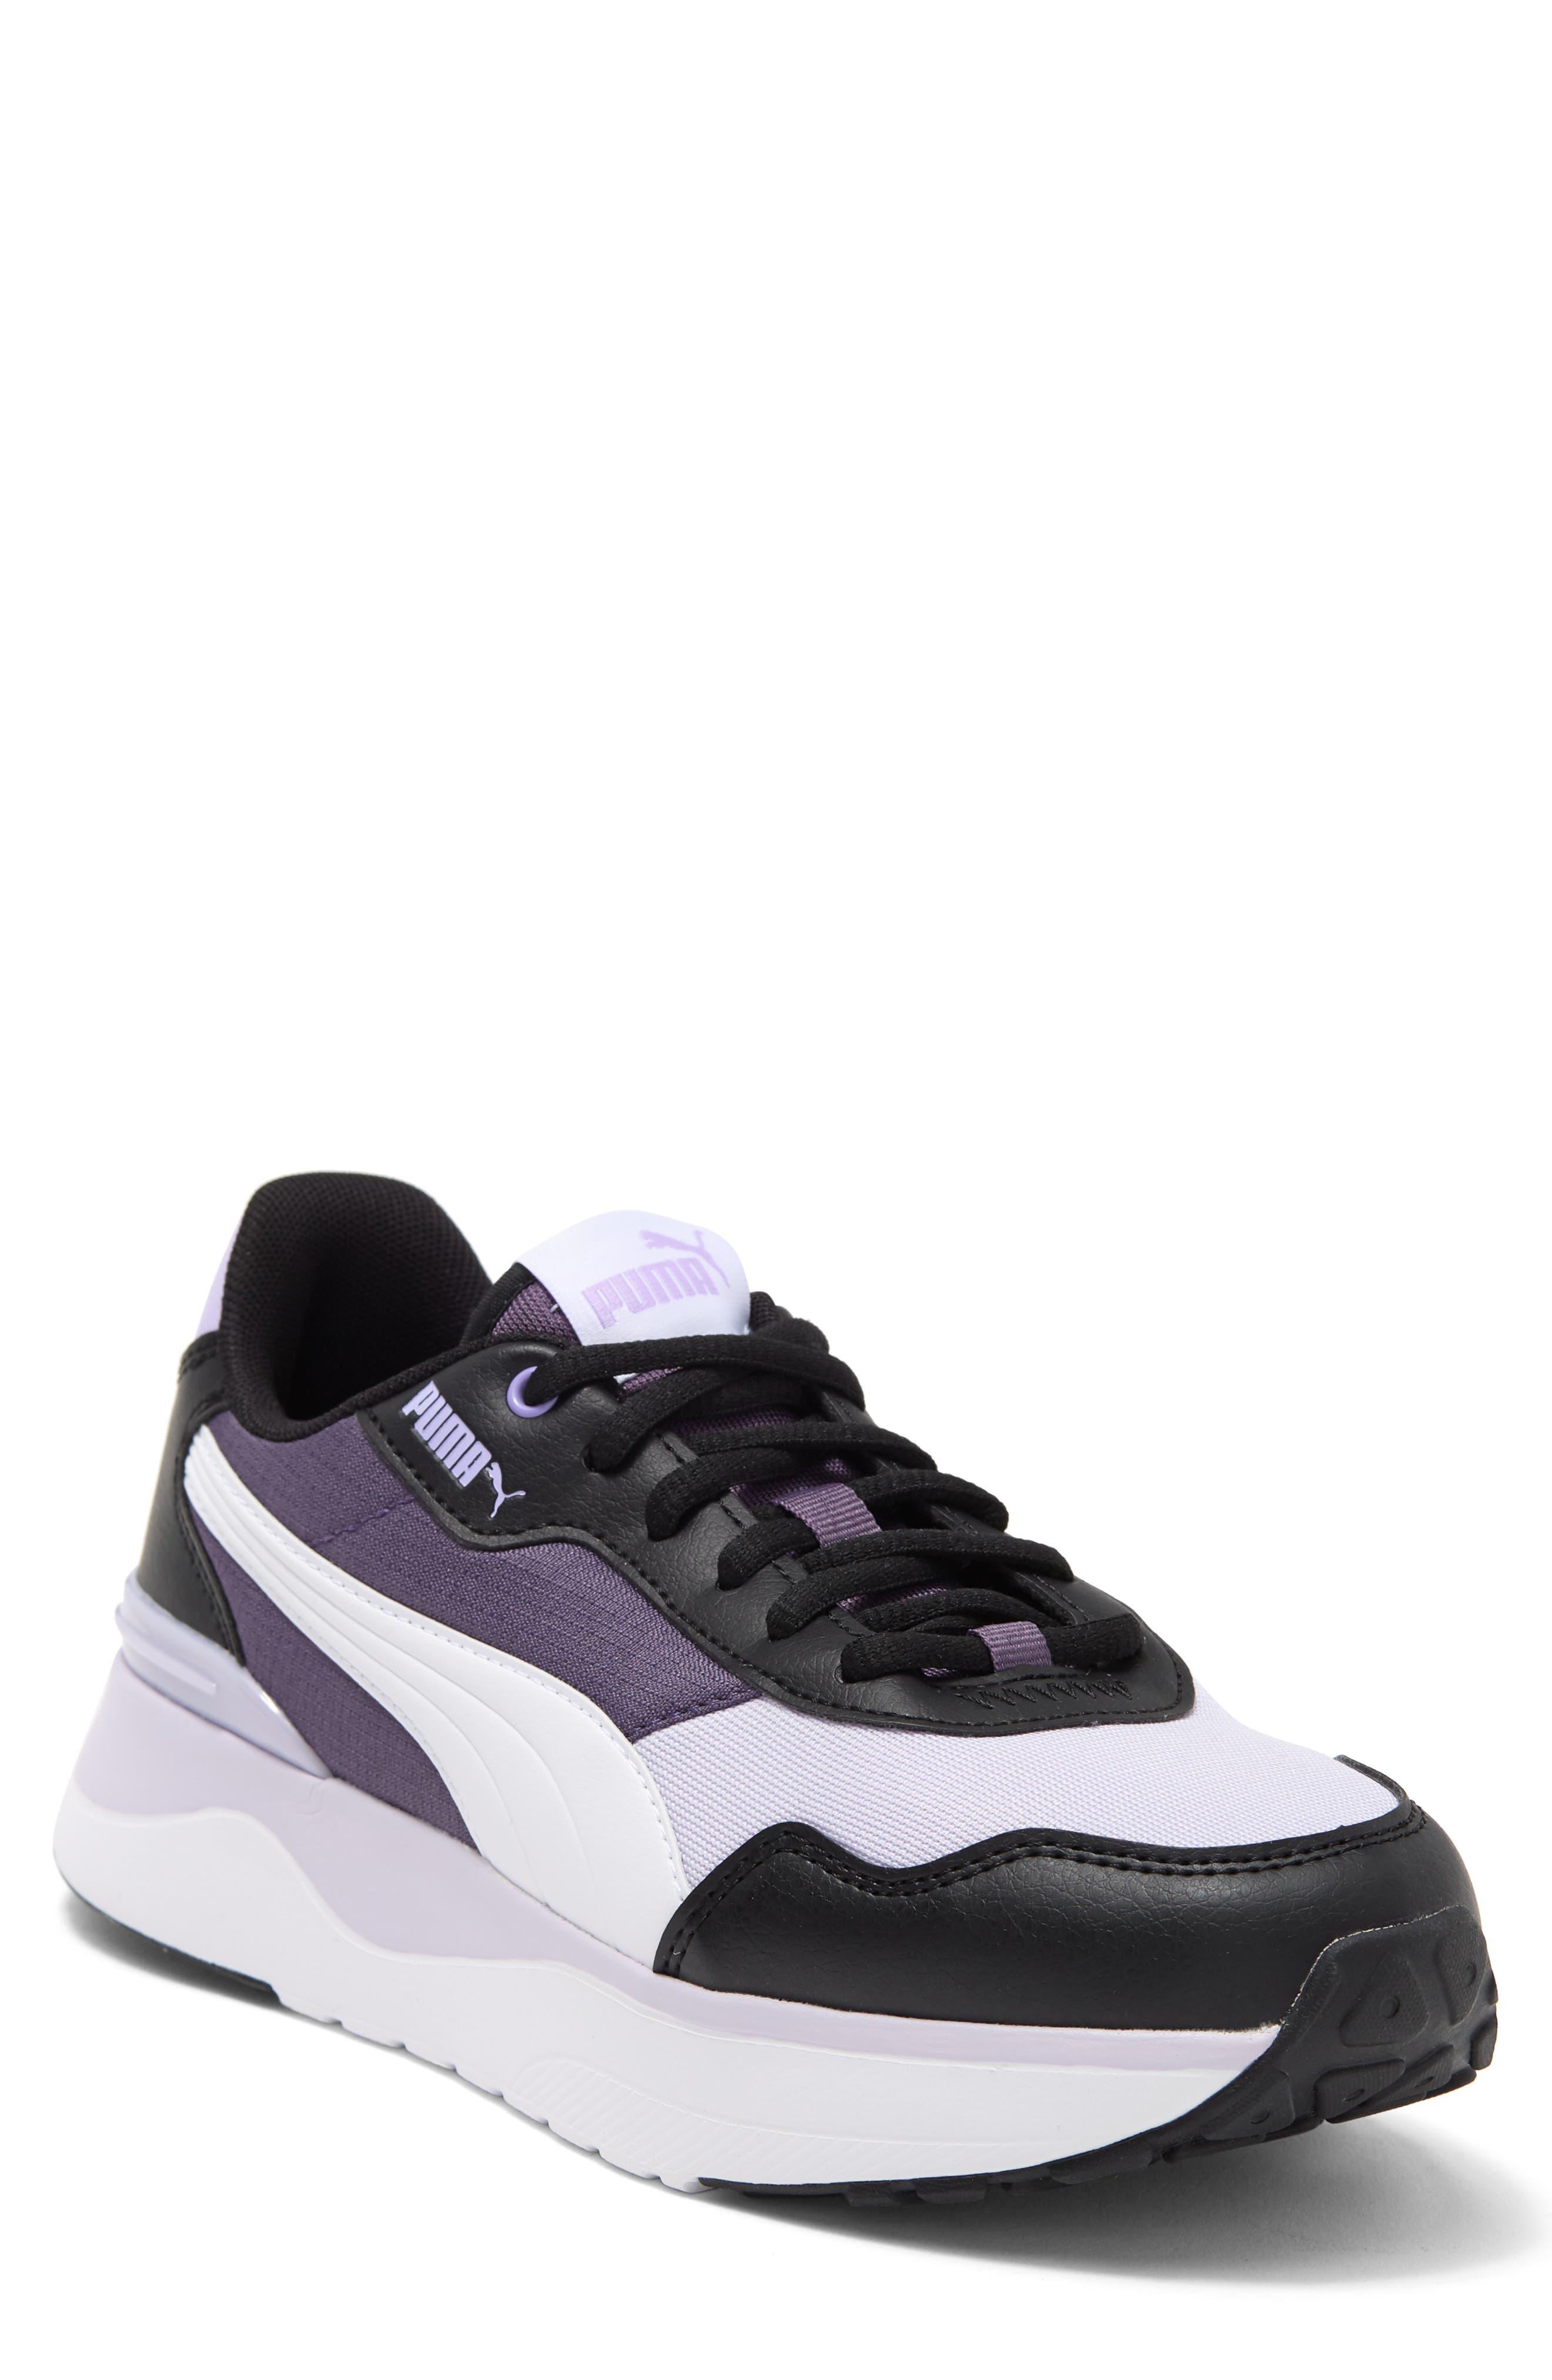 PUMA R78 Voyage Sneaker In Purple-white-lavender-black At Nordstrom Rack |  Lyst